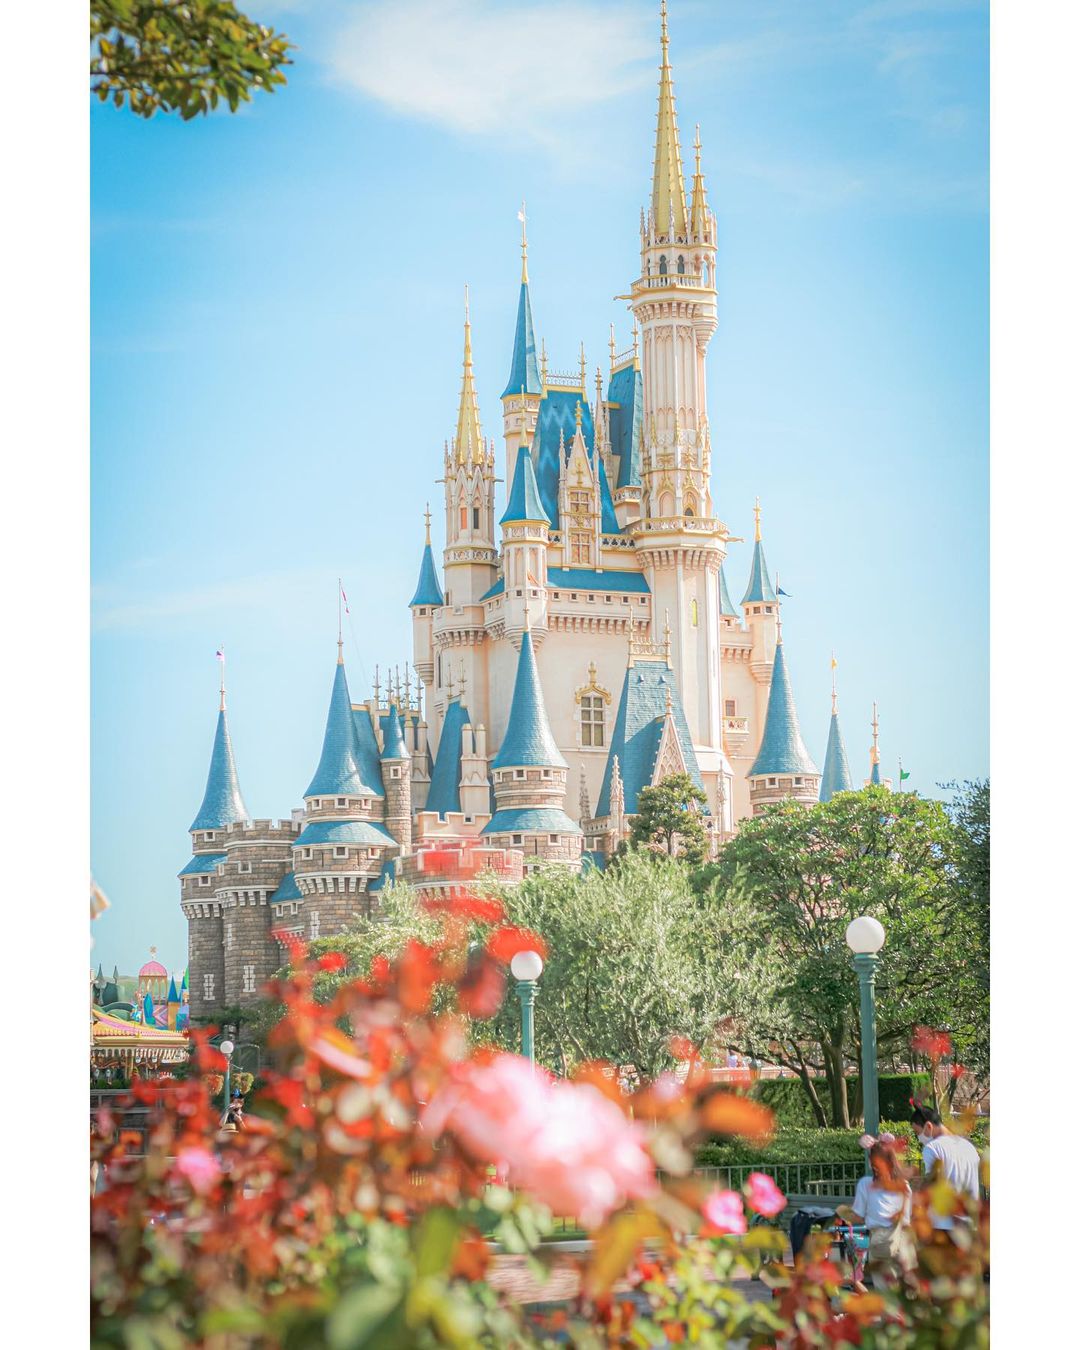 Château de Tokyo Disneyland